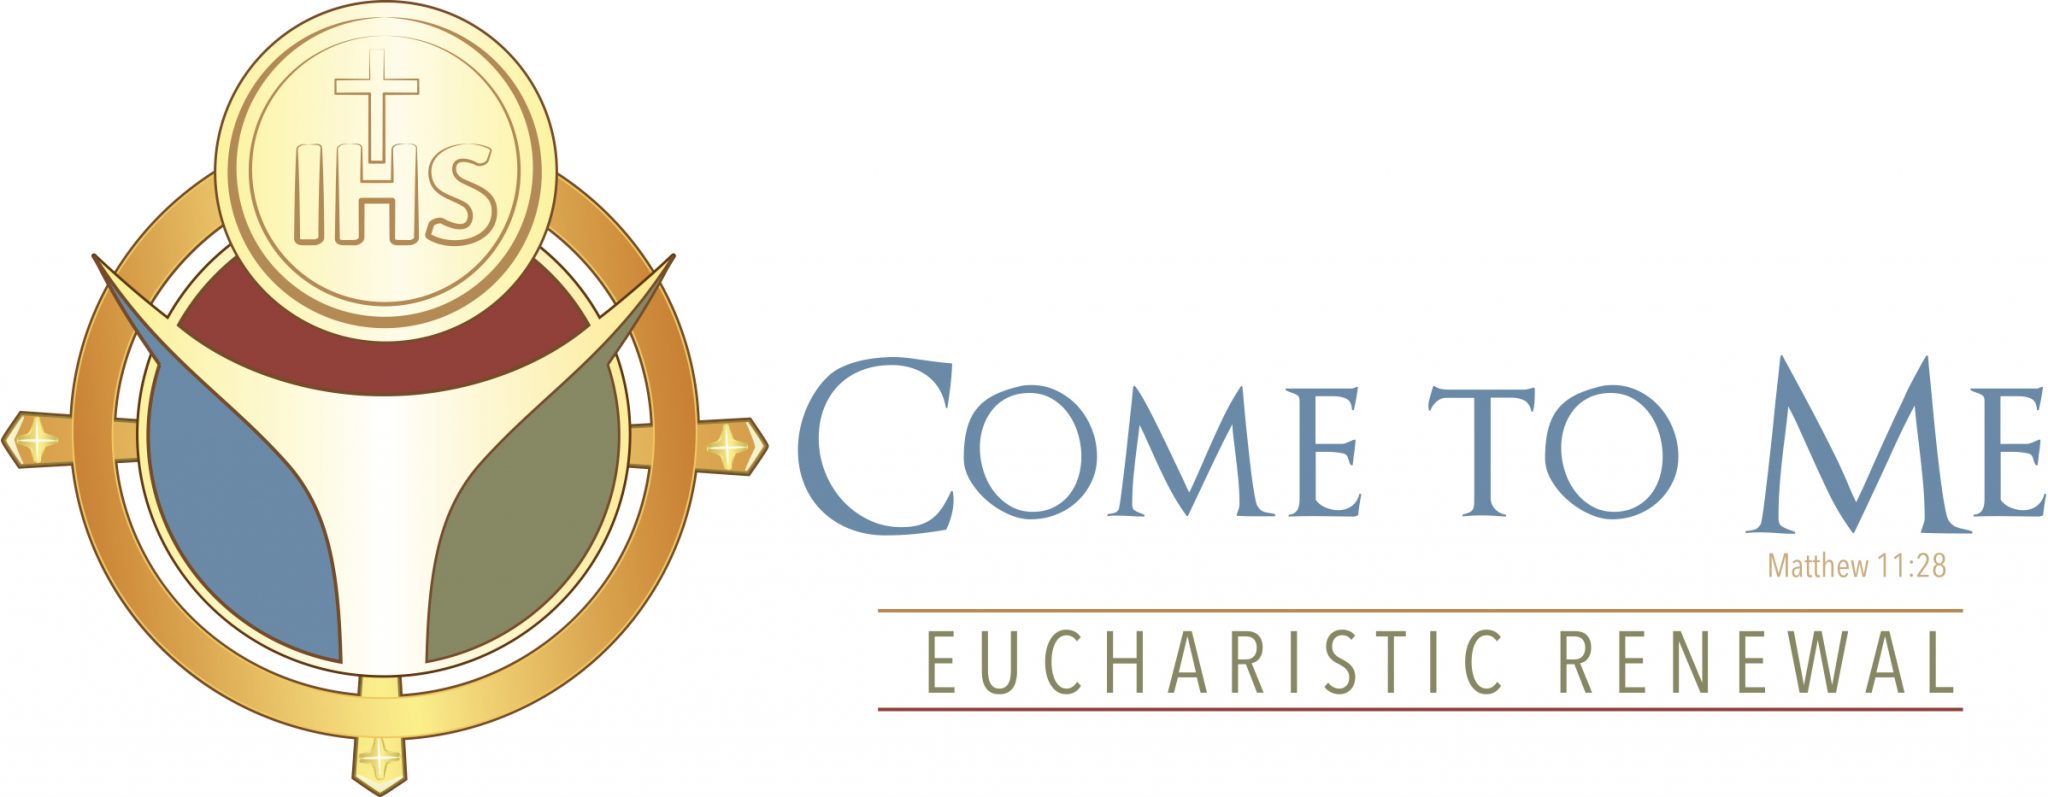 Come To Me - Matthew 11:28 - Eucharistic Renewal